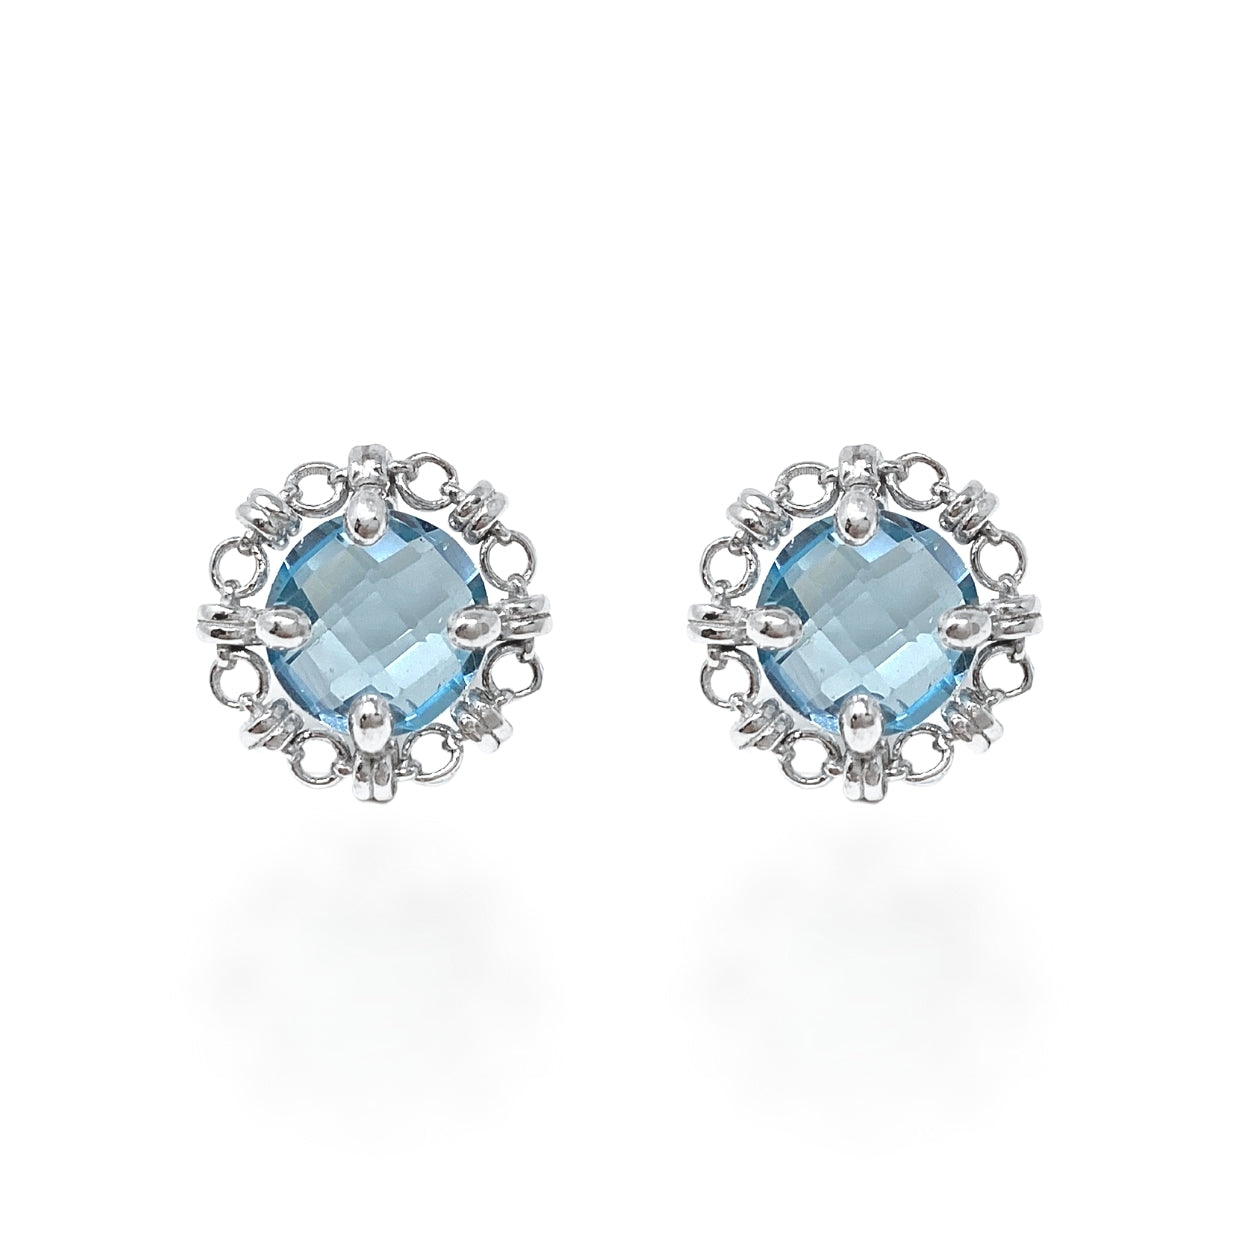 Mini Filary Stud Earrings in Silver with Blue Topaz